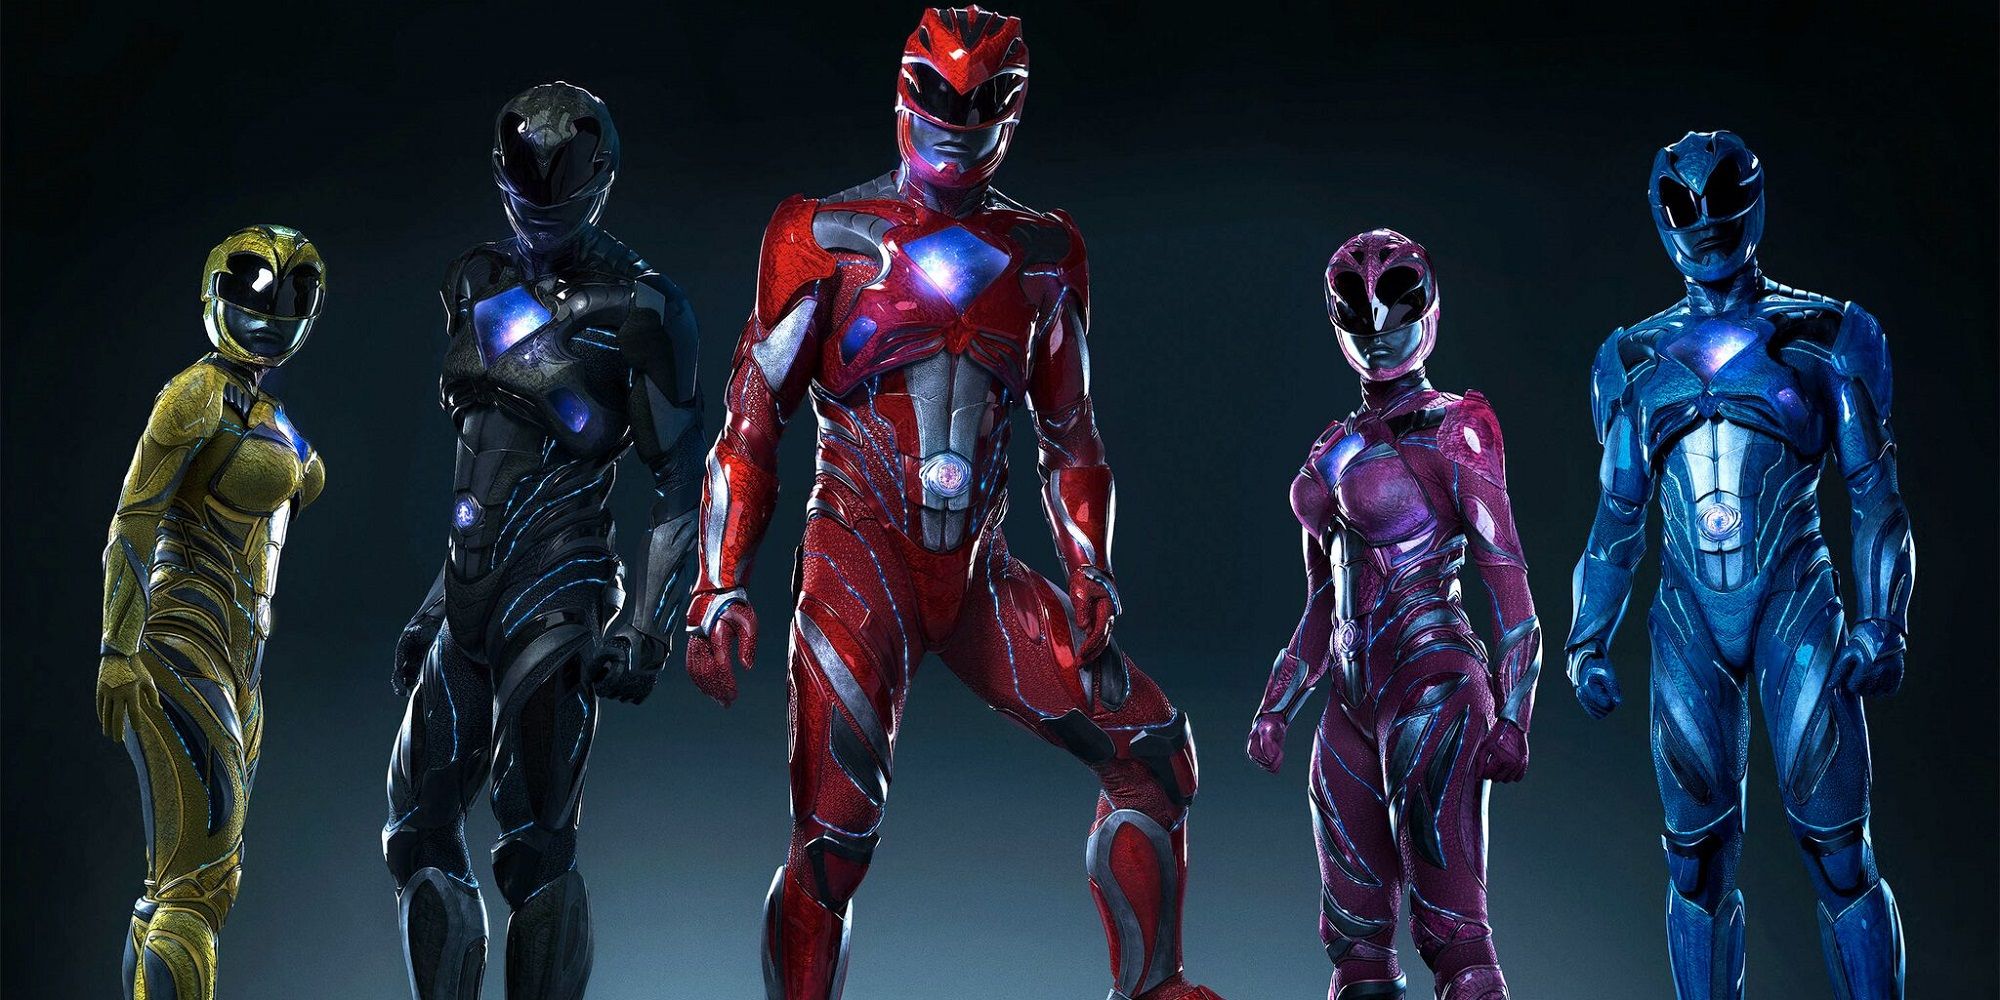 Power Rangers: New Costume Image Released